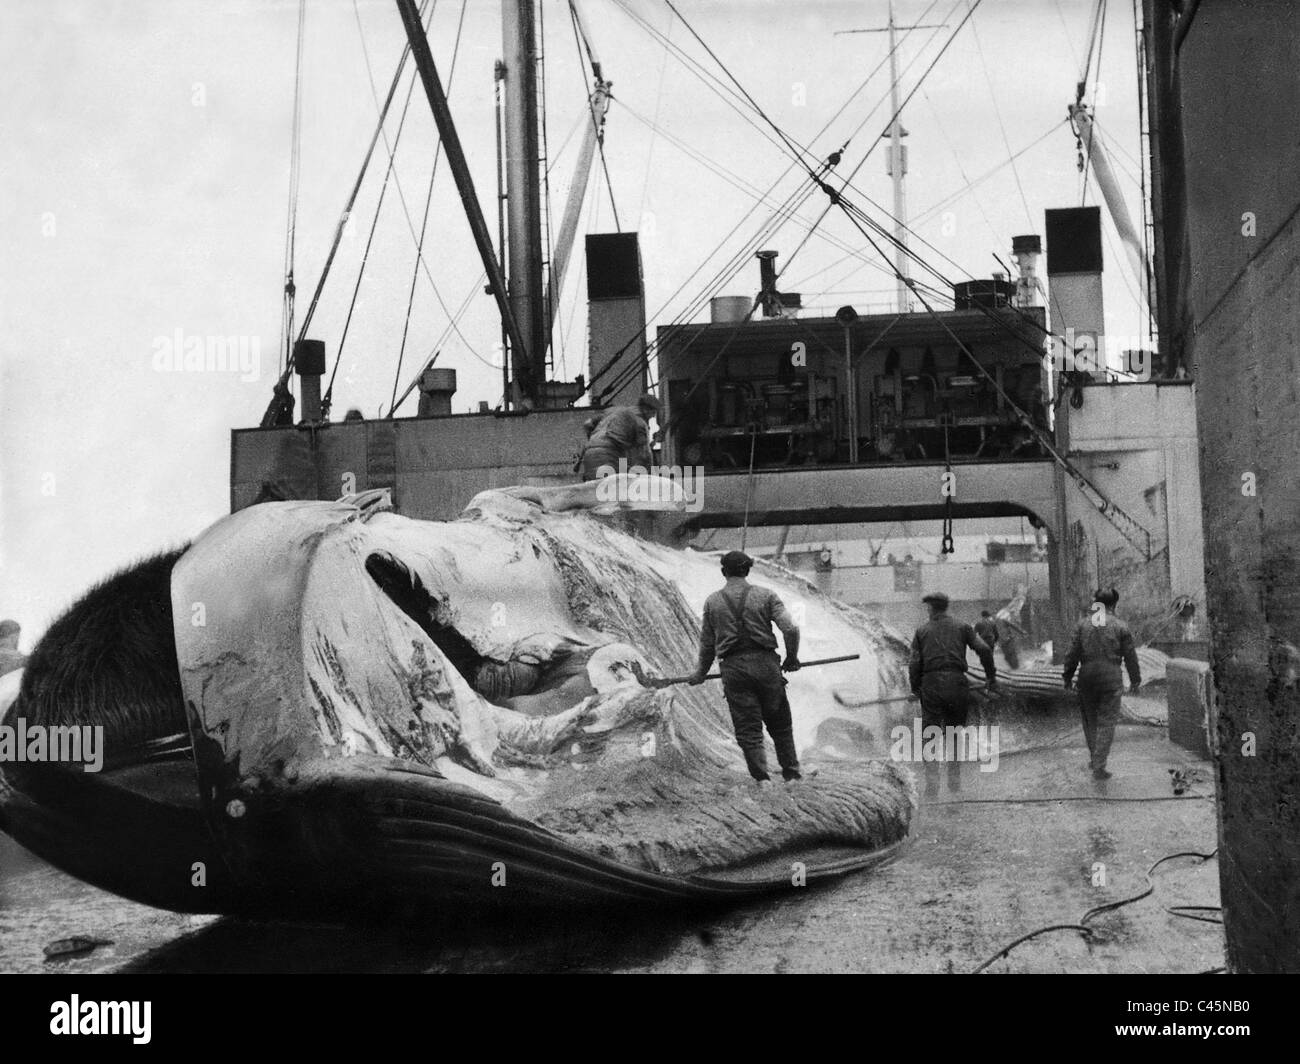 La balena su una nave baleniera, 1938 Foto Stock